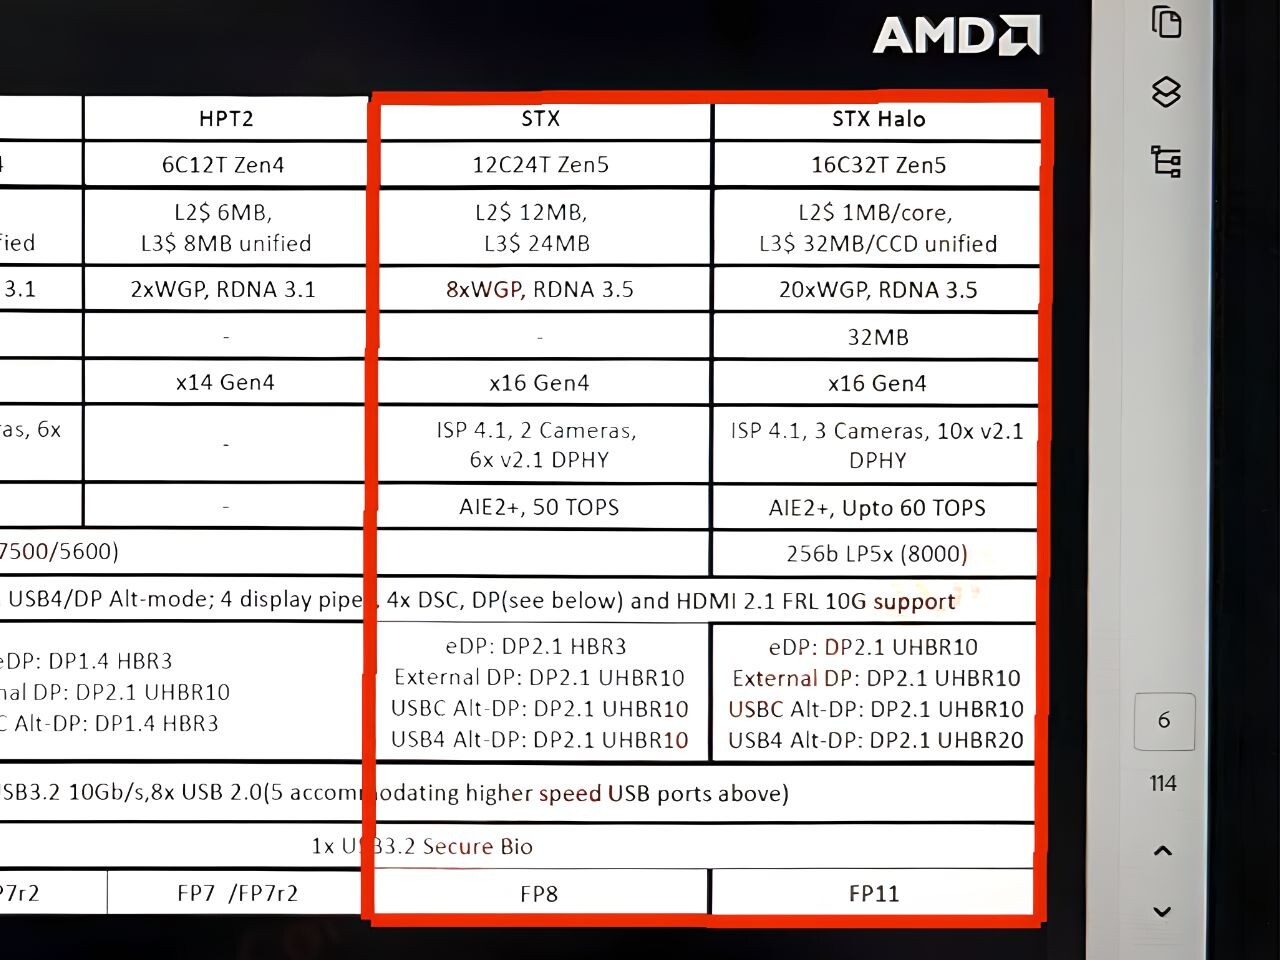 1uvdz1uj3gctyvvu หลุดข้อมูลซีพียู AMD Strix Point ในรุ่น Mobile มาพร้อมจำนวนคอร์ 12 Core / 24 Thread แต่ไม่รองรับ PCIe Gen 5